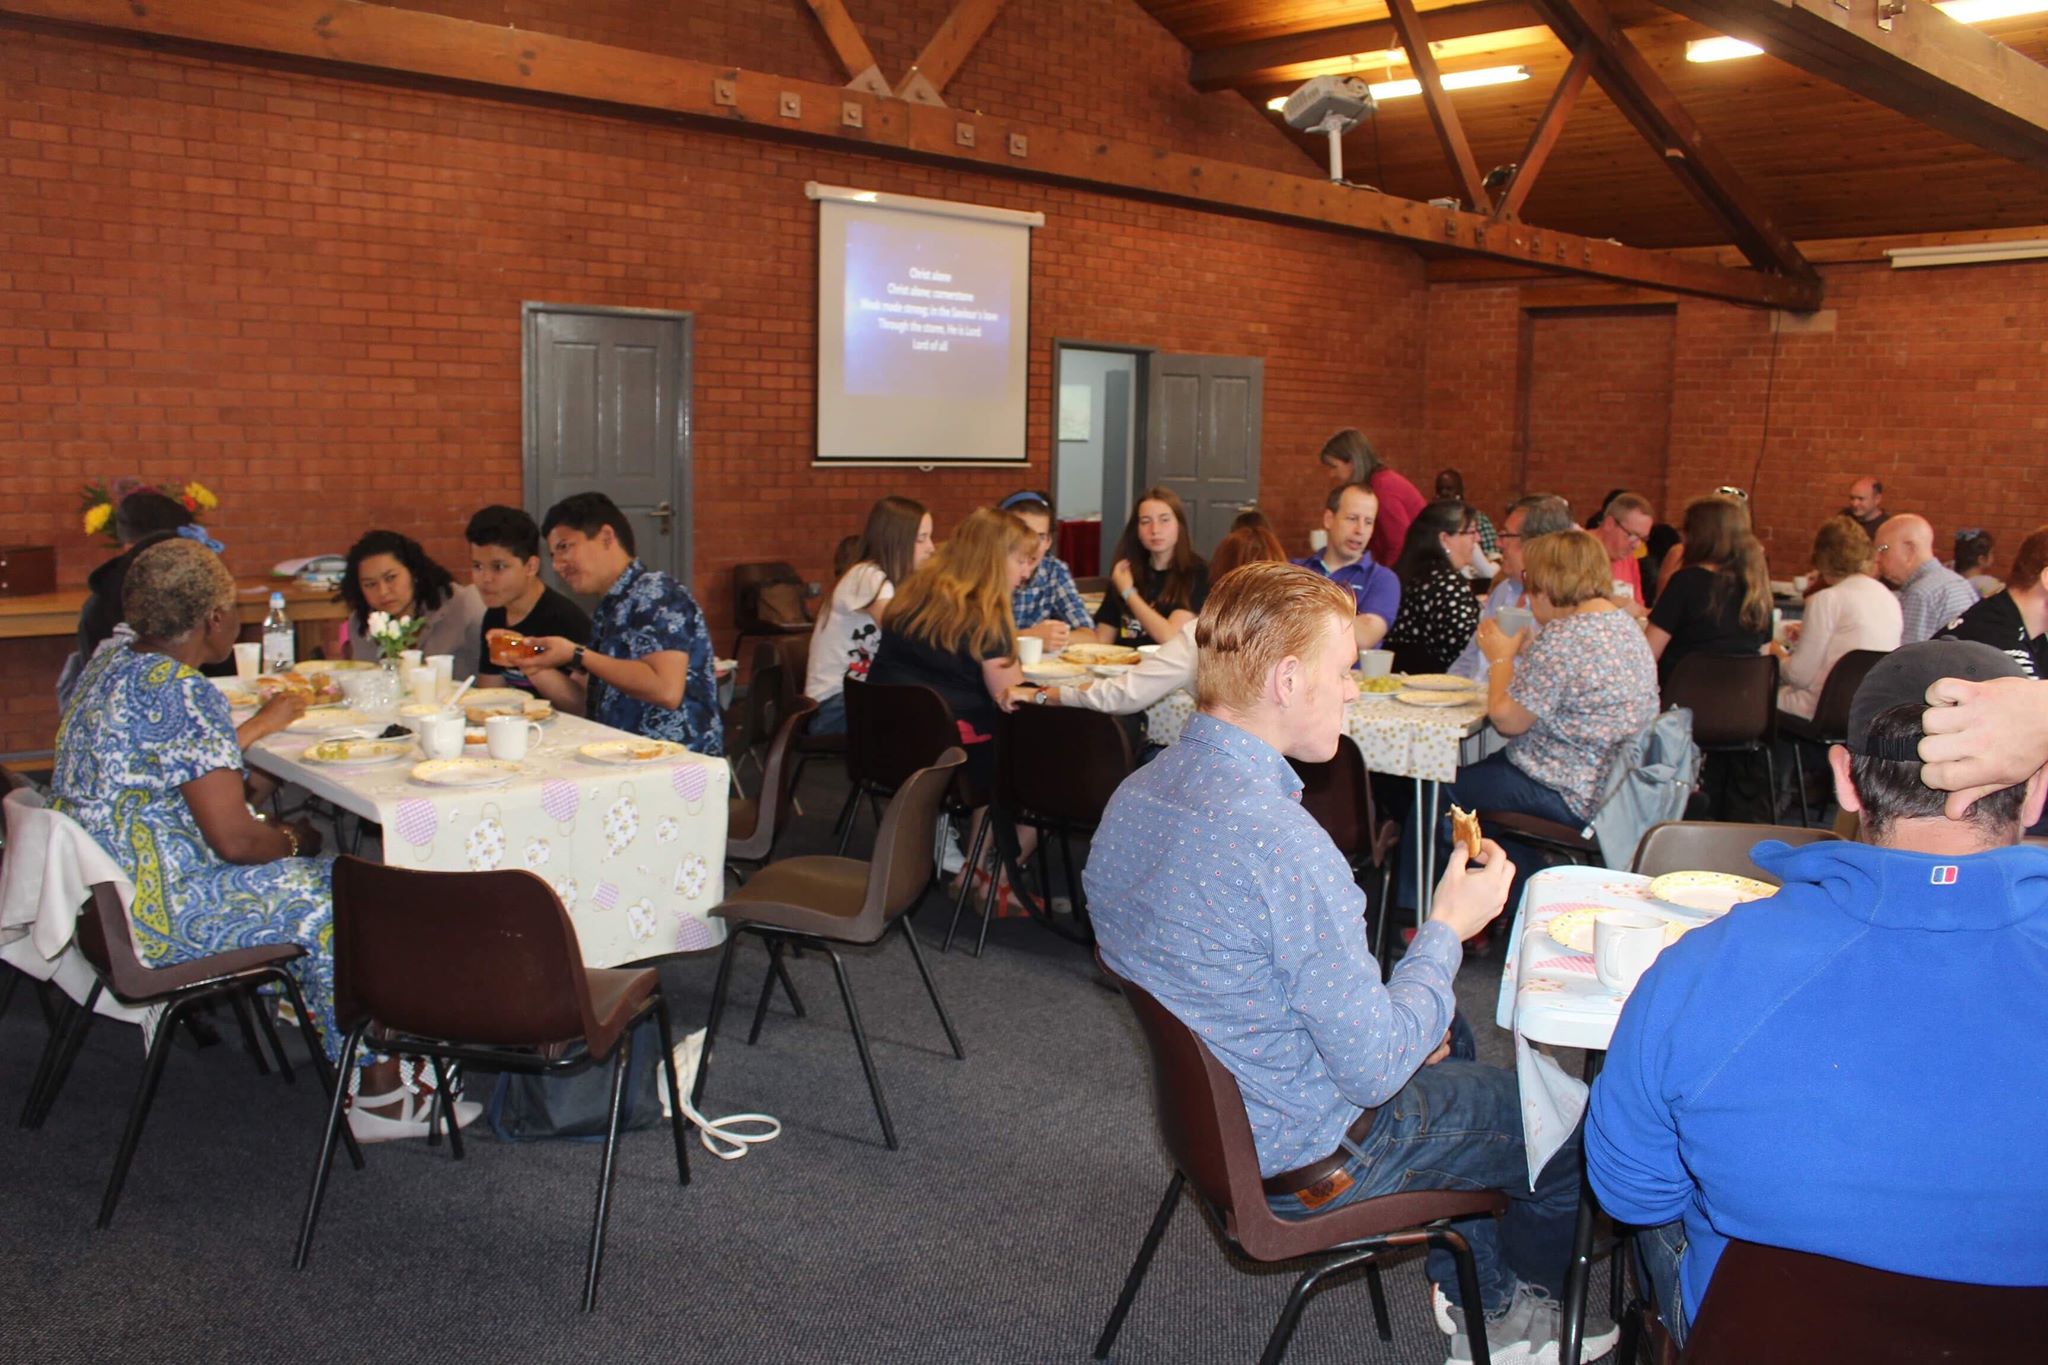 newbold community church - church sunday breakfast held in main hall